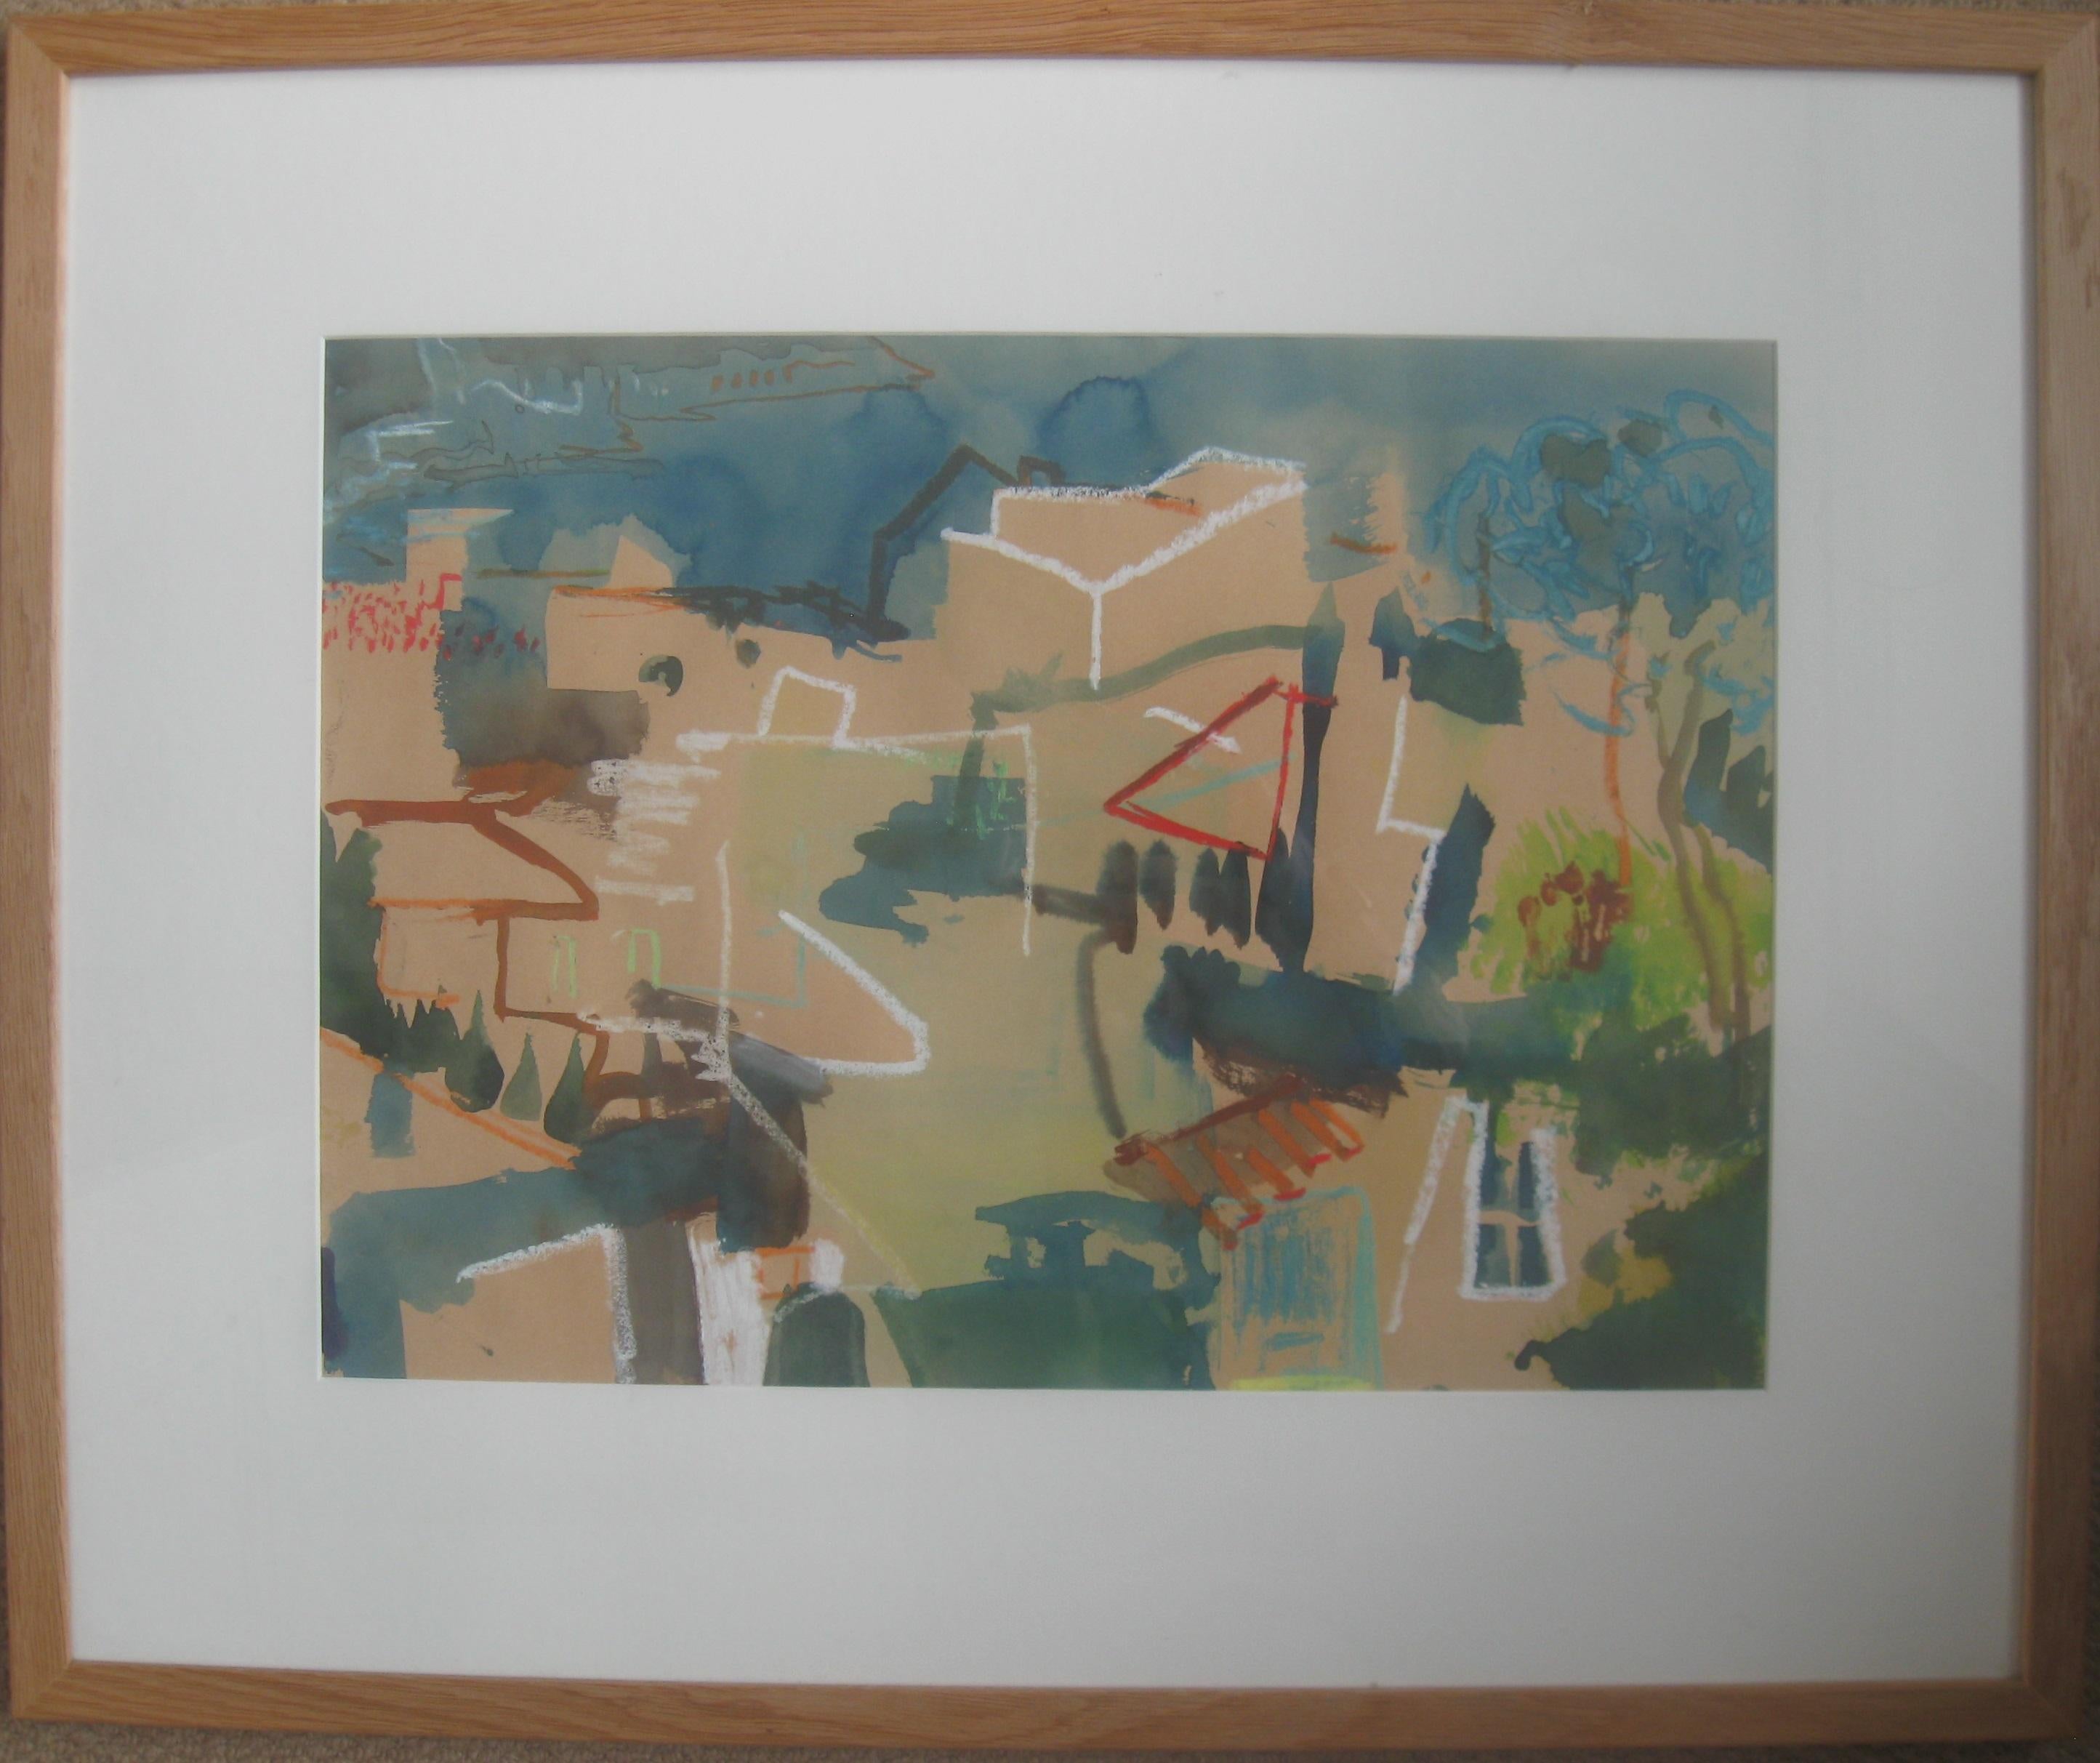 Andy Gradwell Landscape Art - 'Ravello' c 2005 Mixed media on toned paper circa 2005